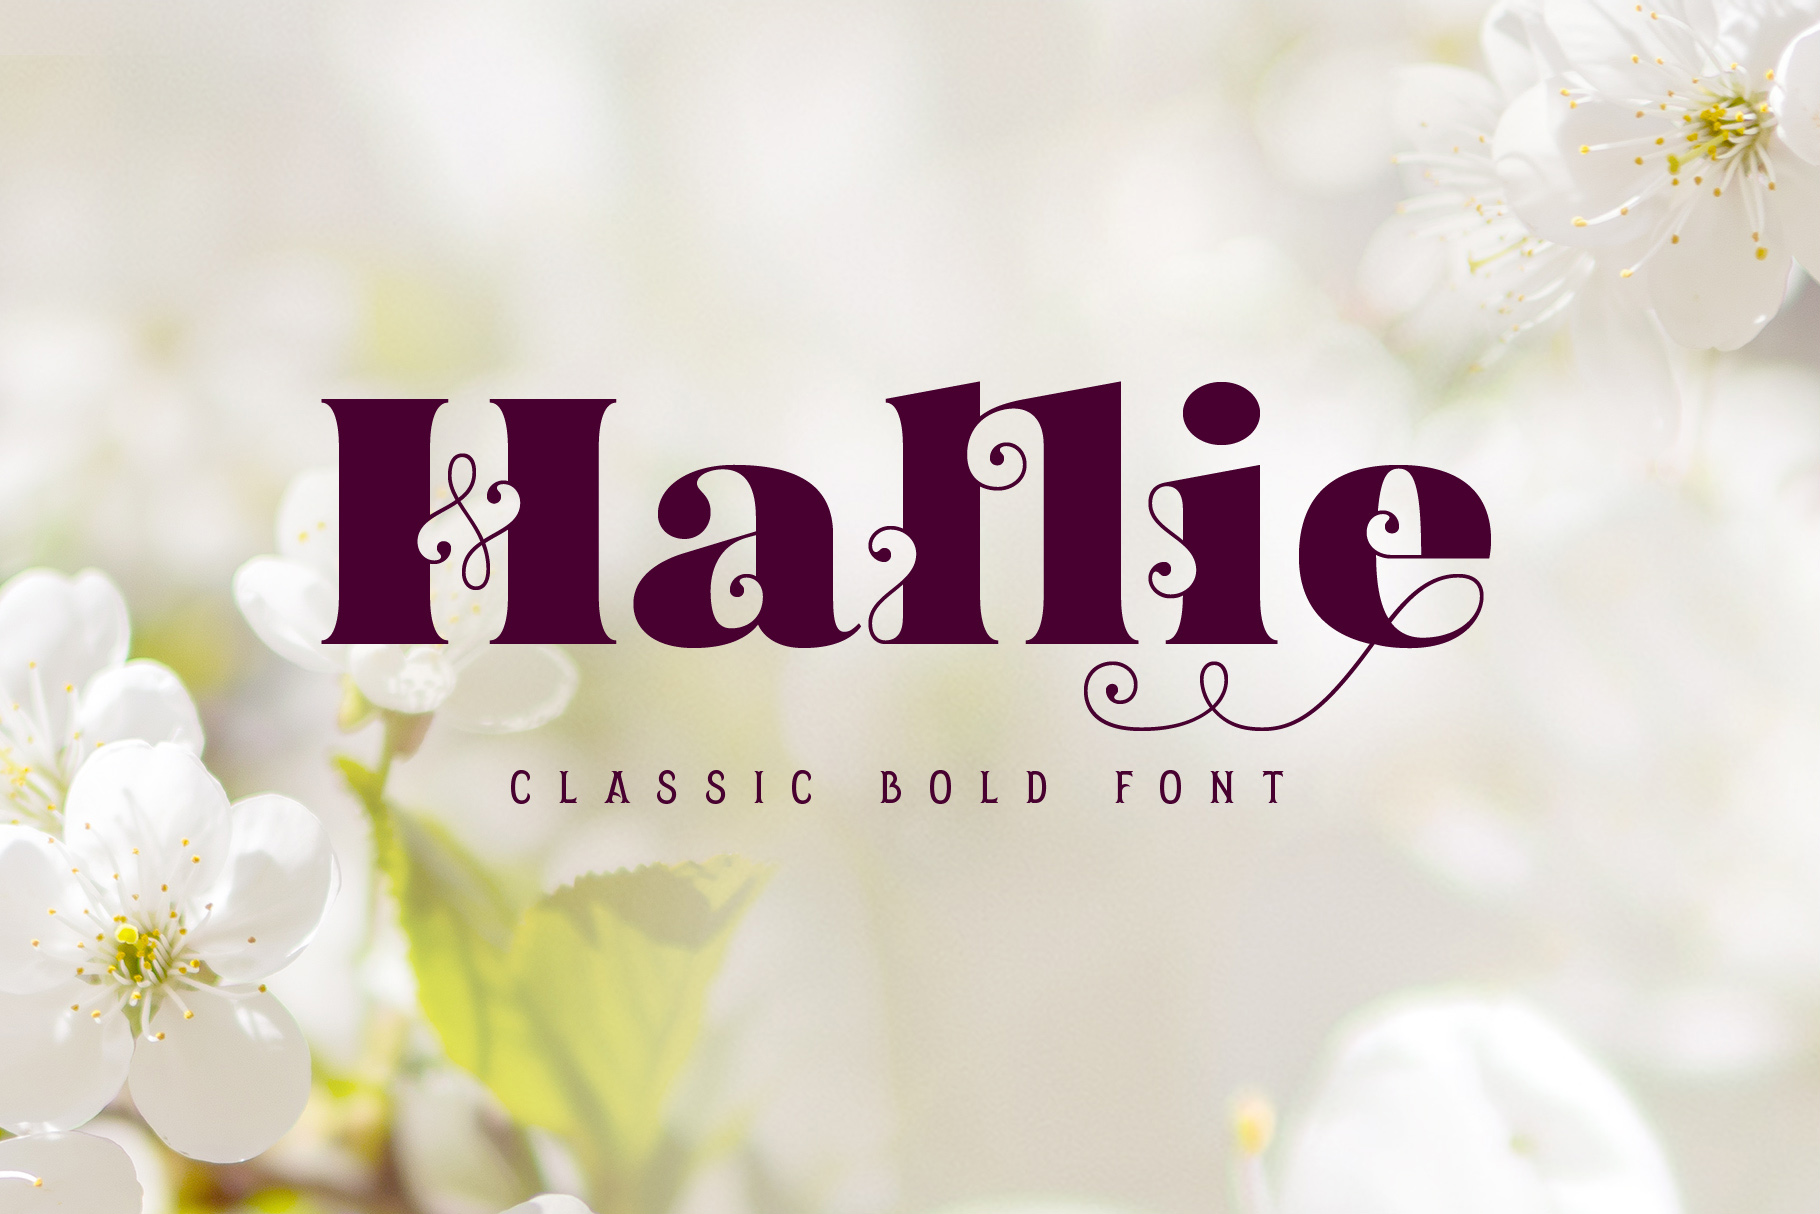 Hallie - Bold Classic Font facebook image.